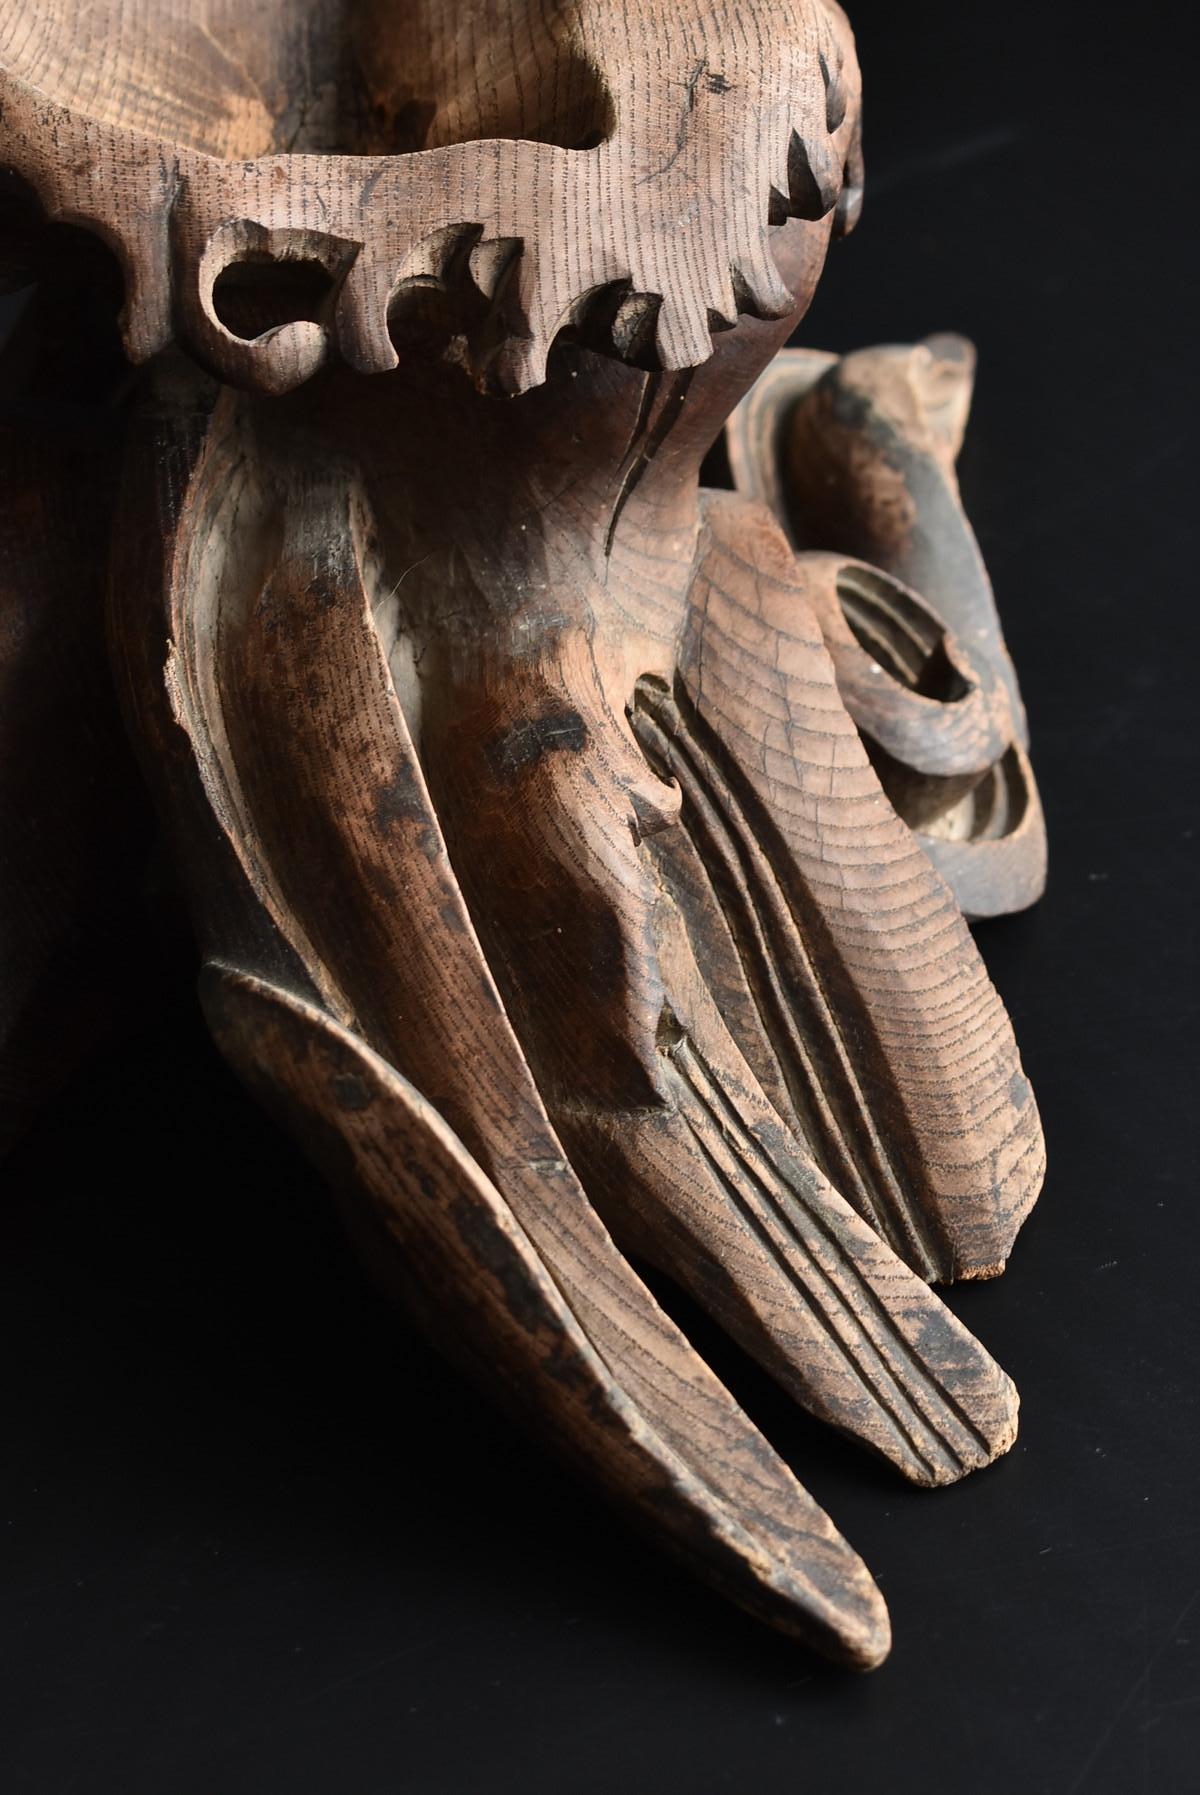 Japanese Antique Wood Carving Wavy Figurine / Incense Burner / Decoration Stand 1